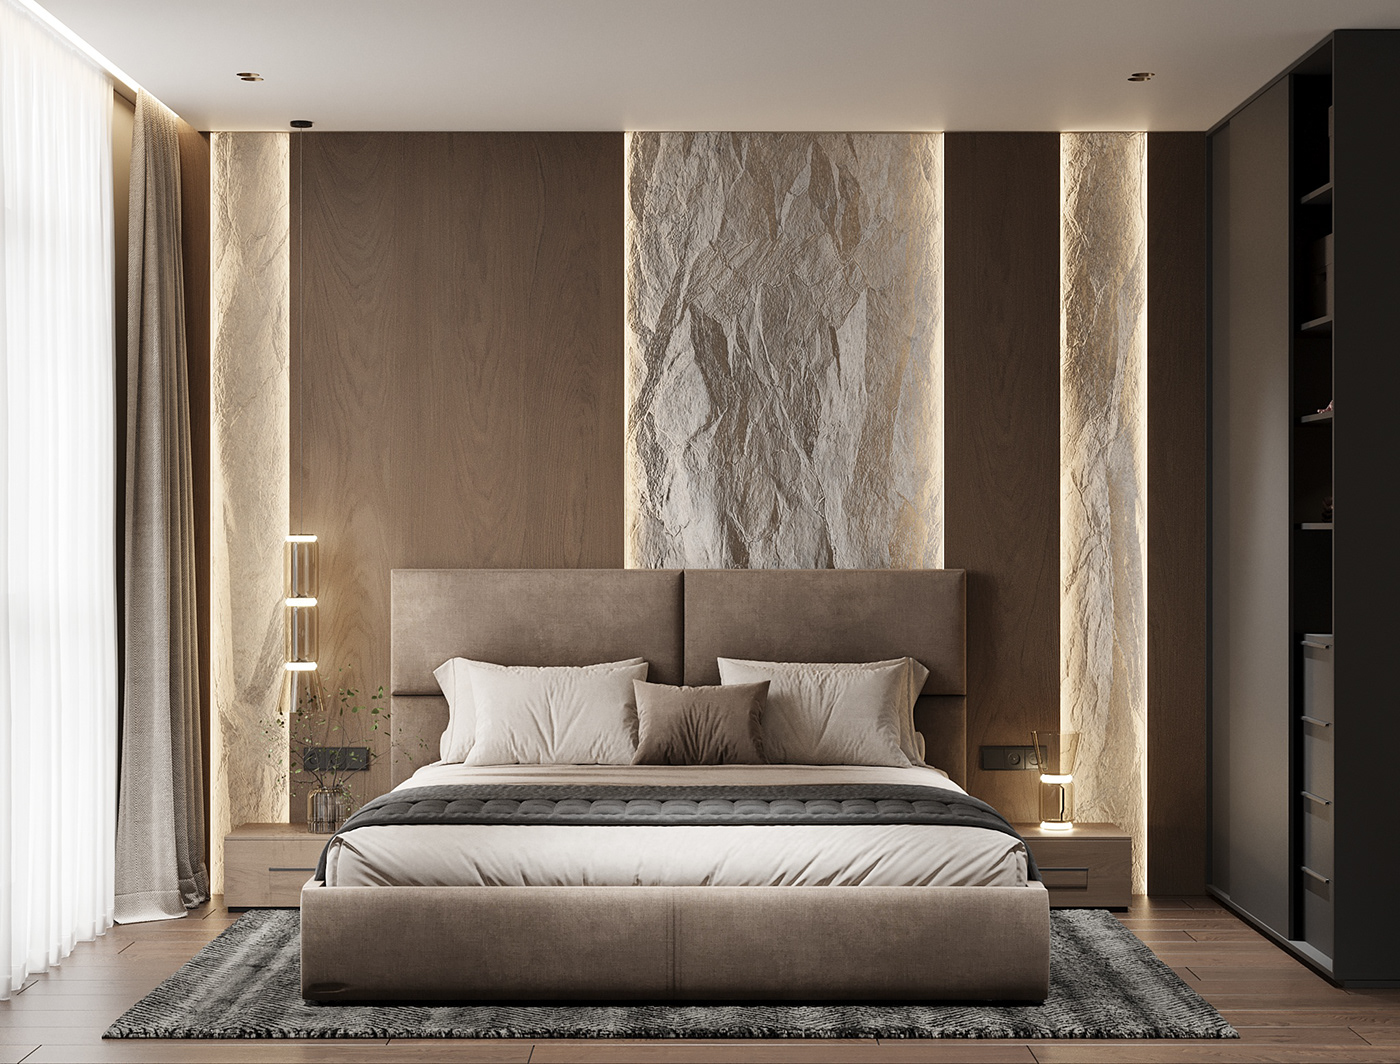 apartment design Interior design bedroom design visualization Render 3ds max modern corona kitchen design